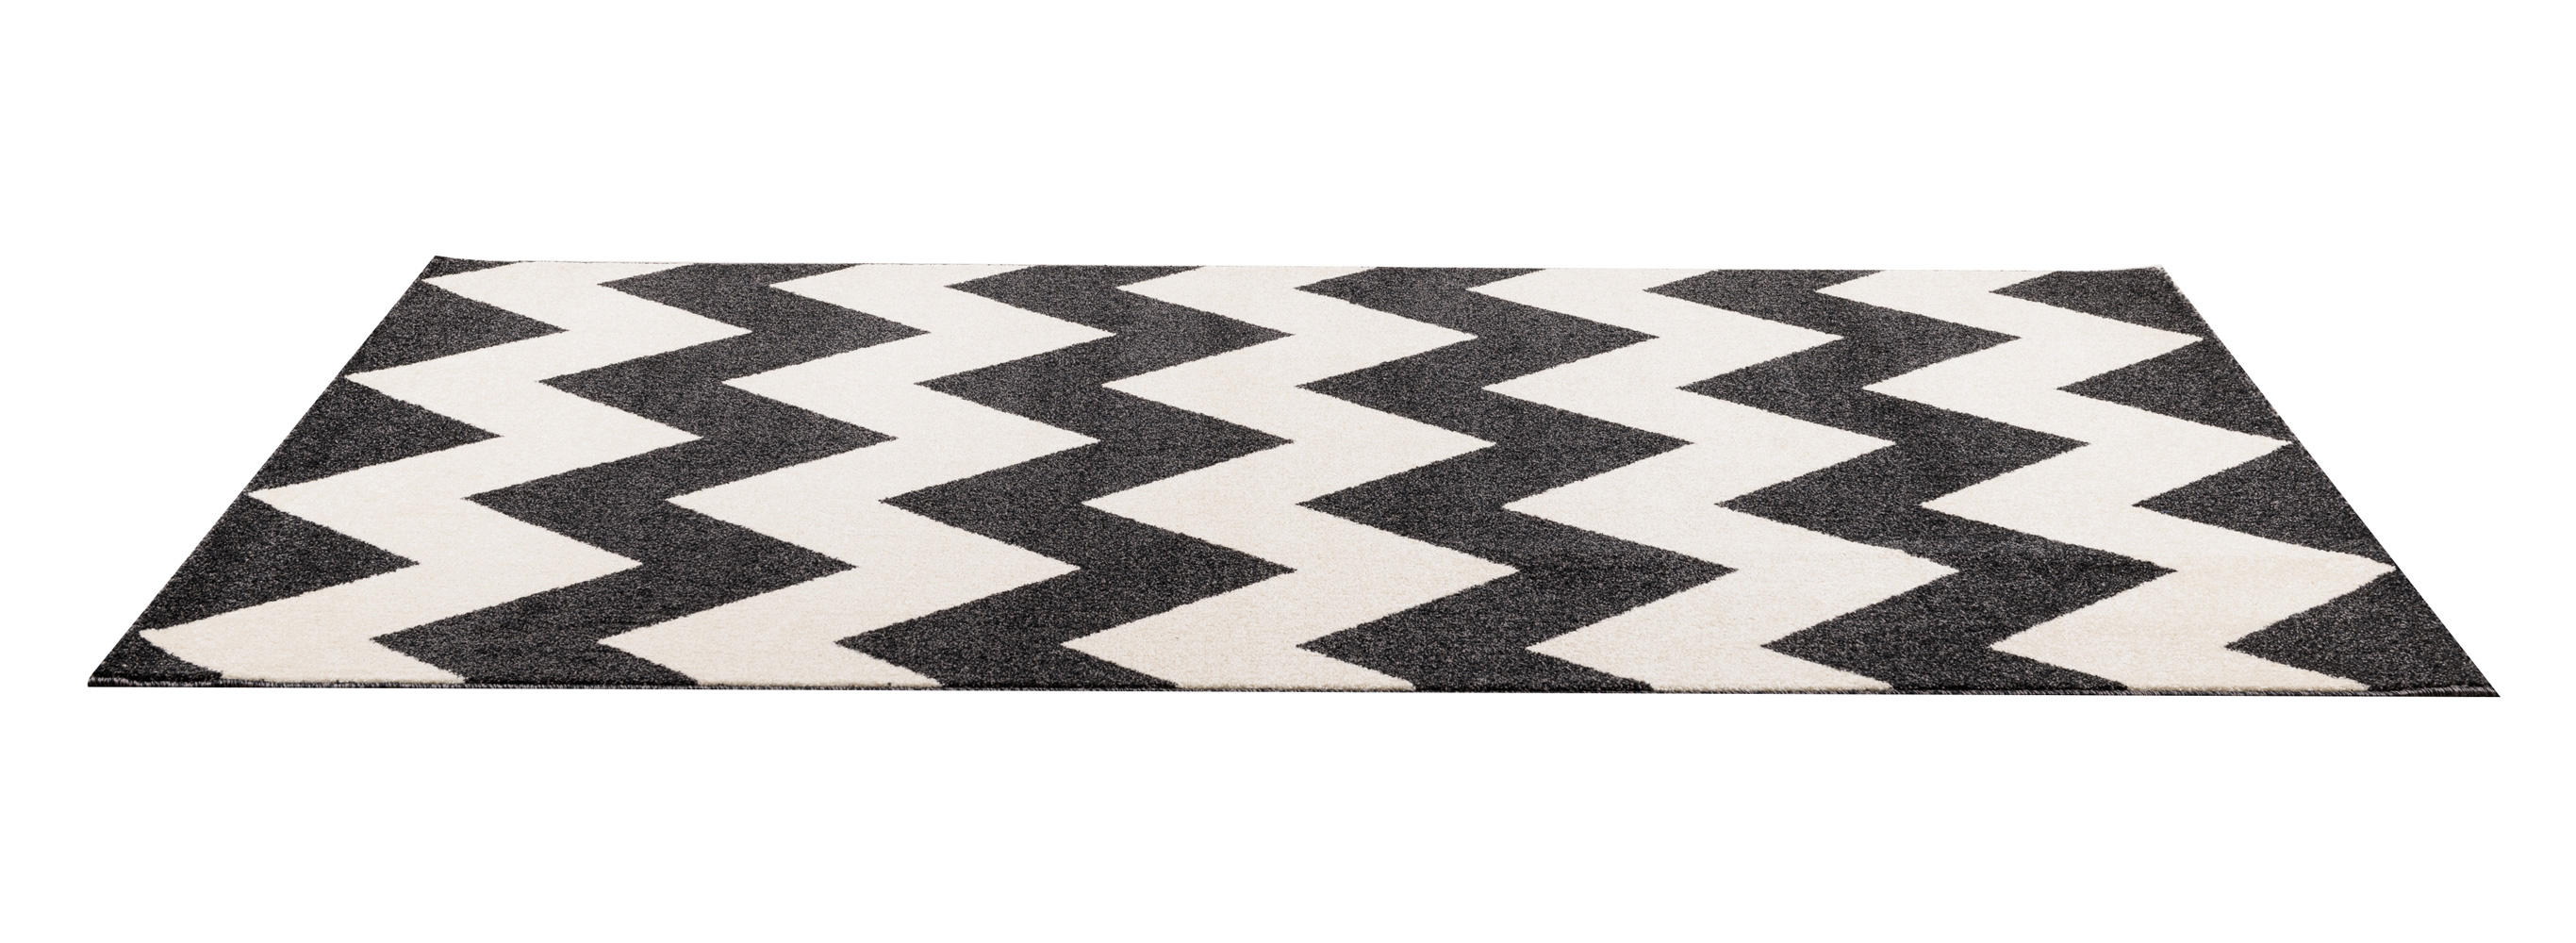 EASYMAT北欧风格超柔丙纶黑白间条地毯